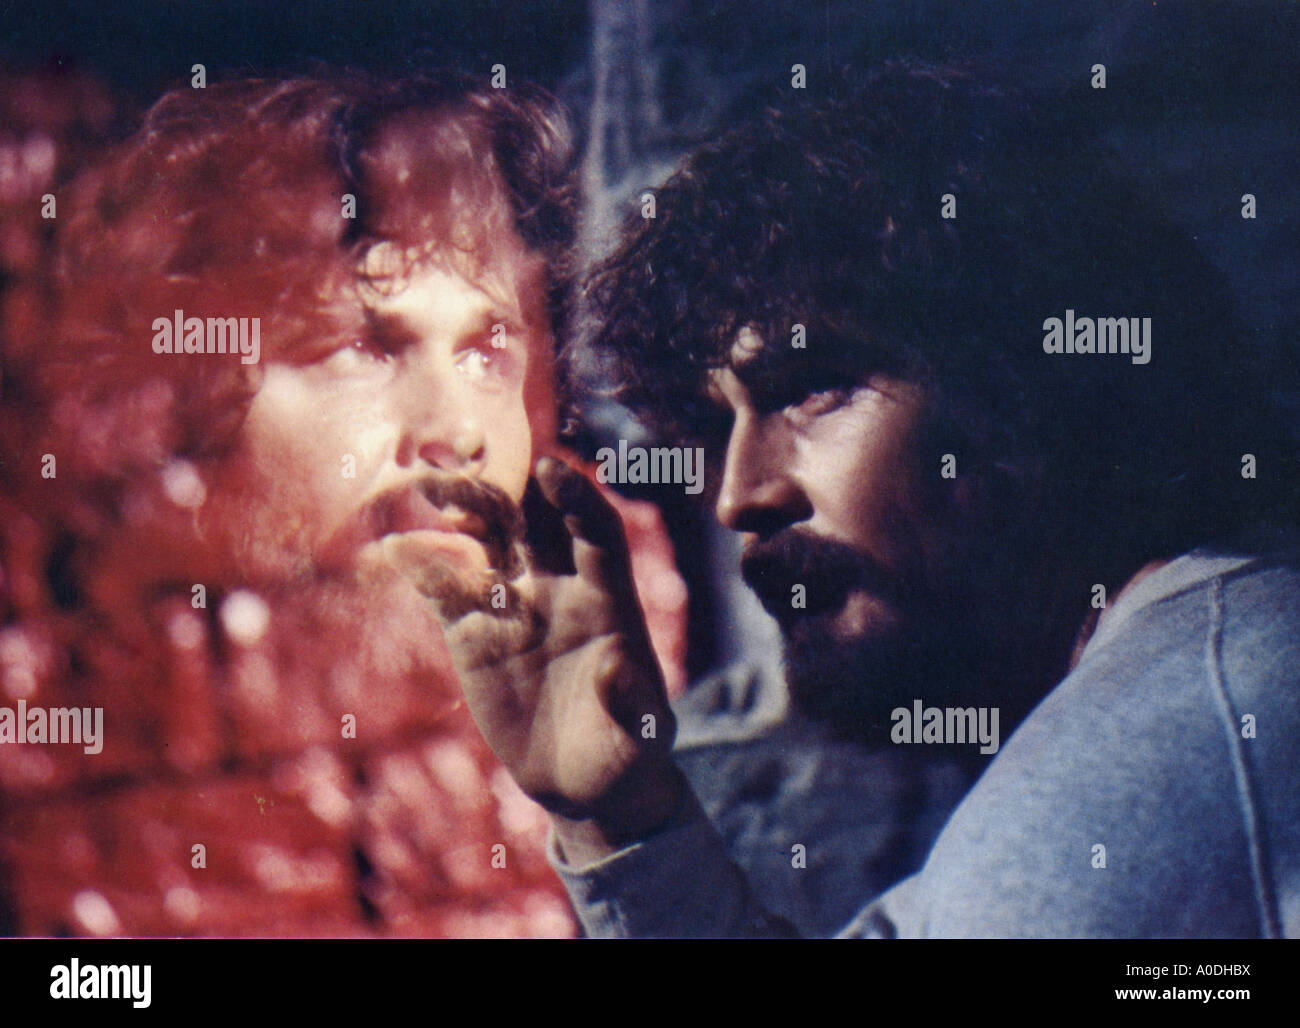 Amityville Horror 1979 Aip Film Mit James Brolin Stockfotografie Alamy